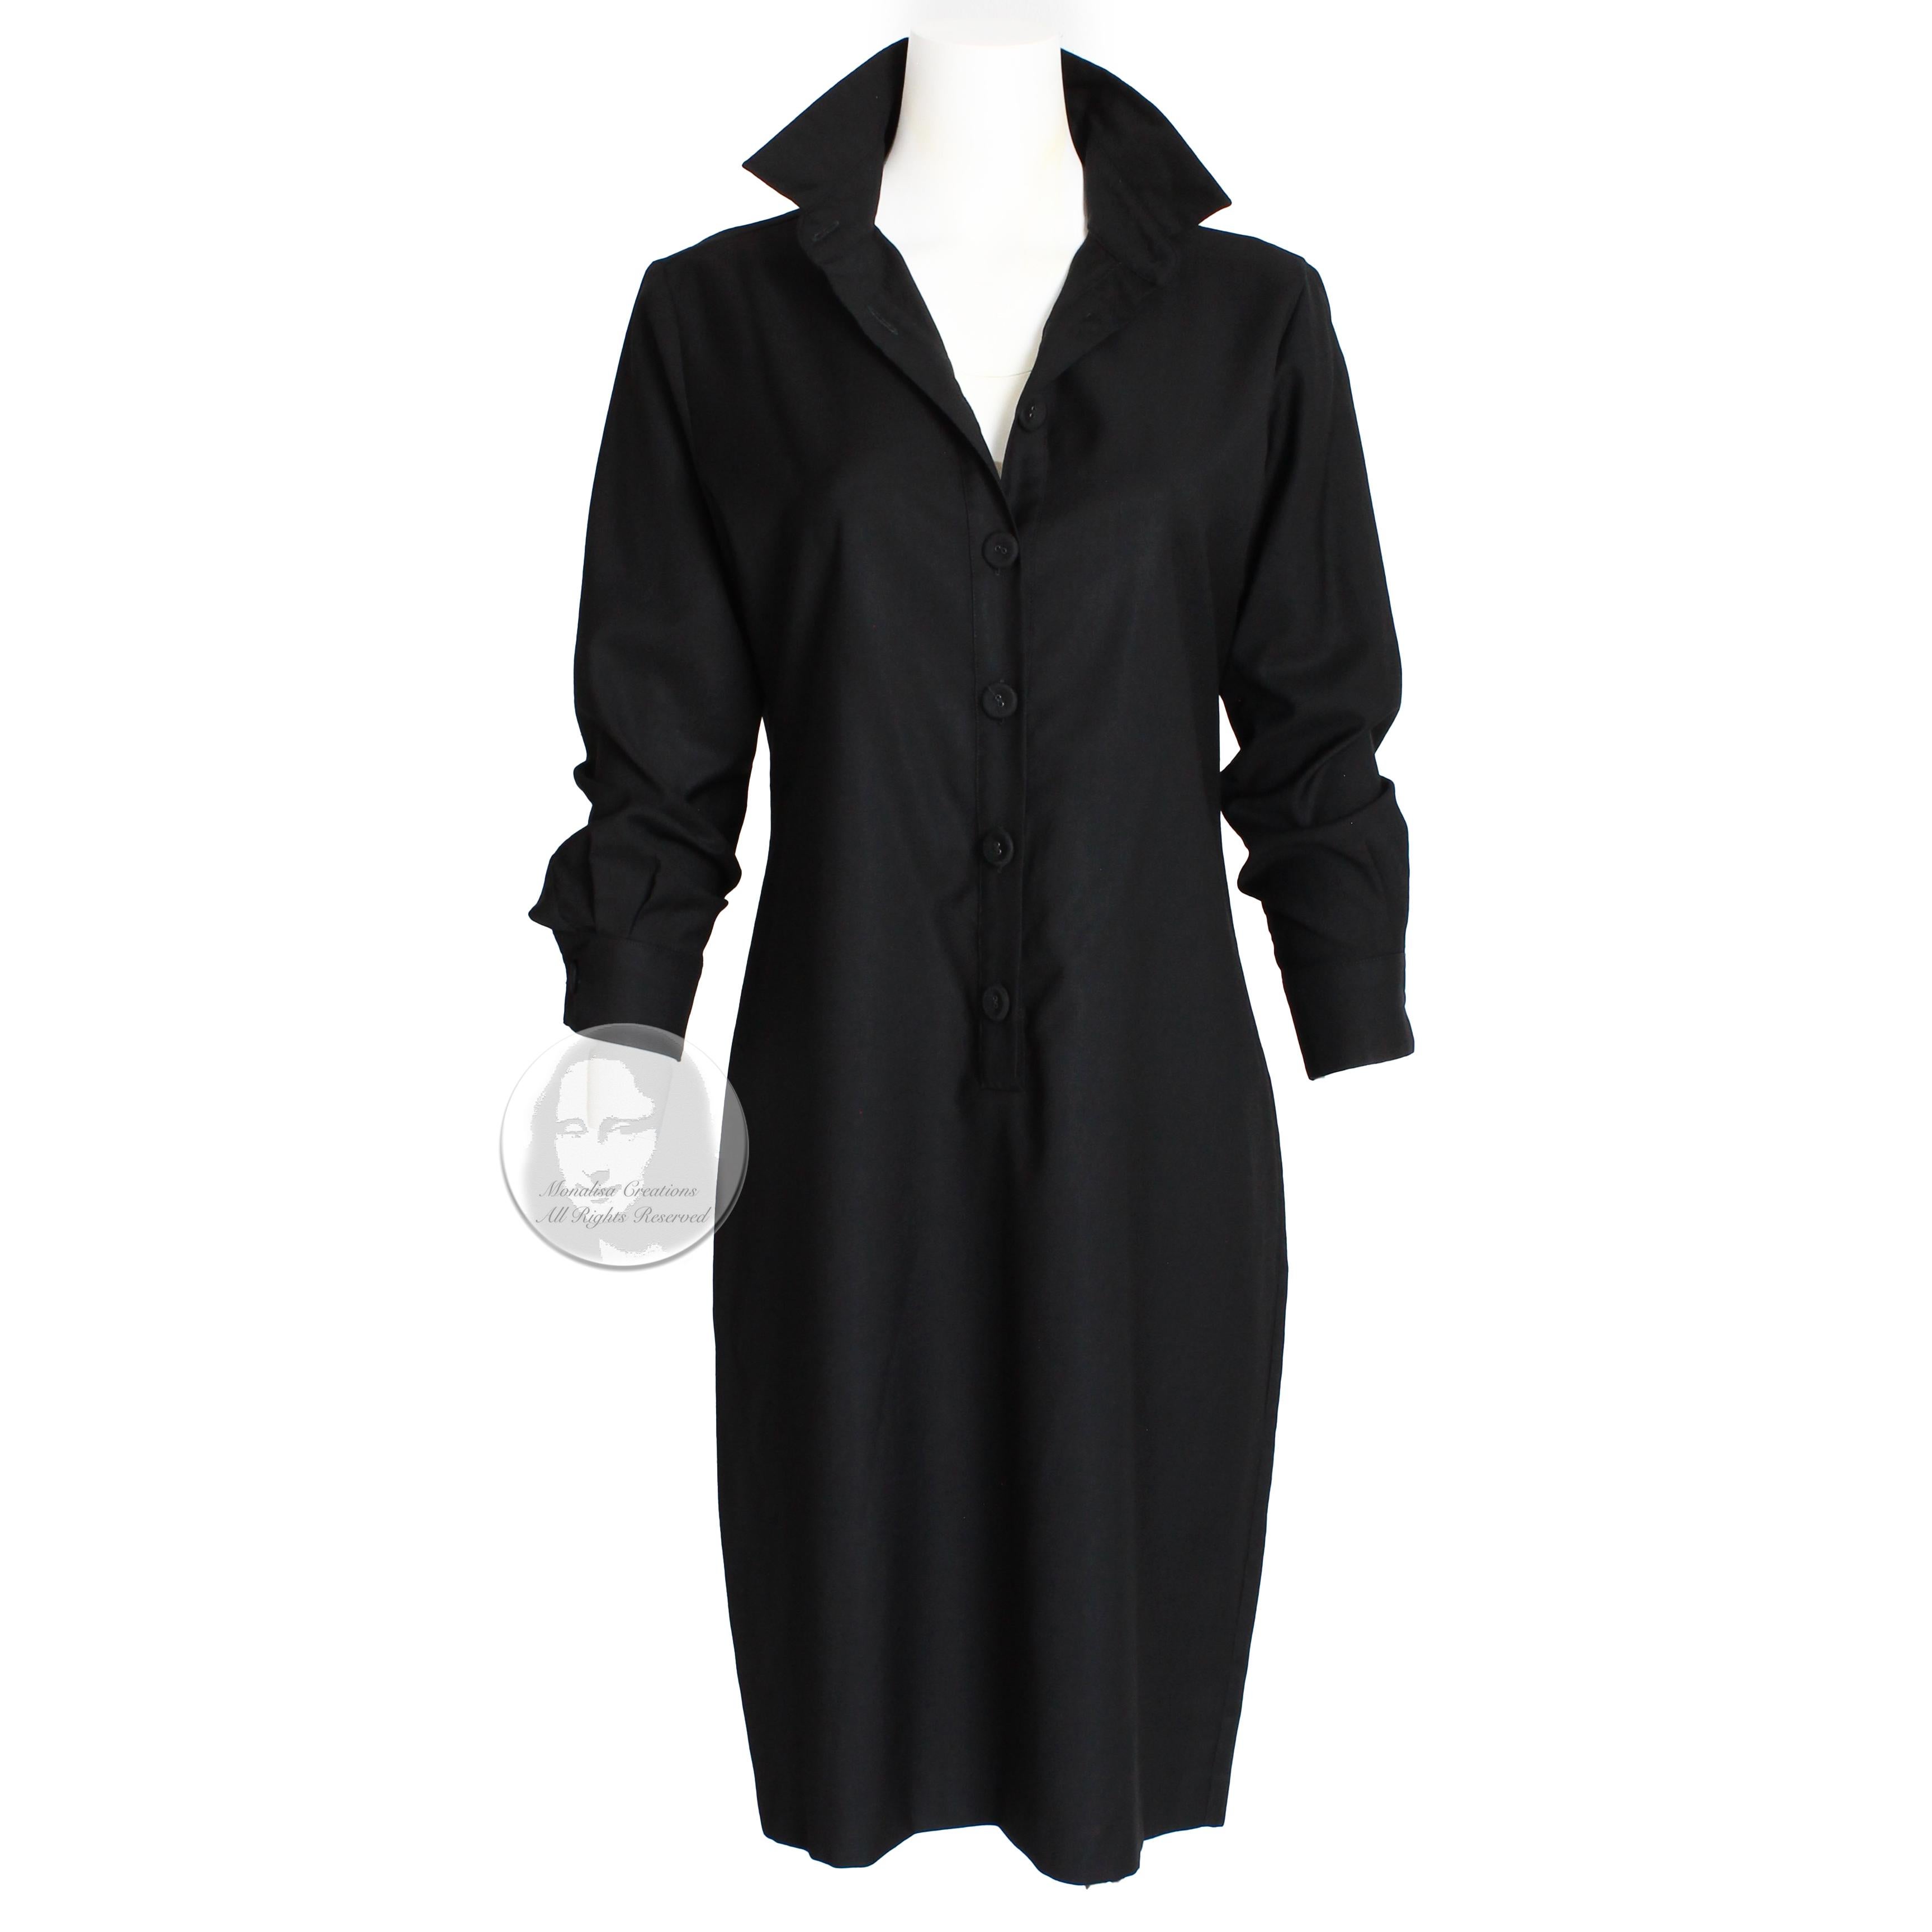 Bottega Veneta Dress Black Wool Twill Shirtwaist Button Front Sz 42 LBD Italy 2